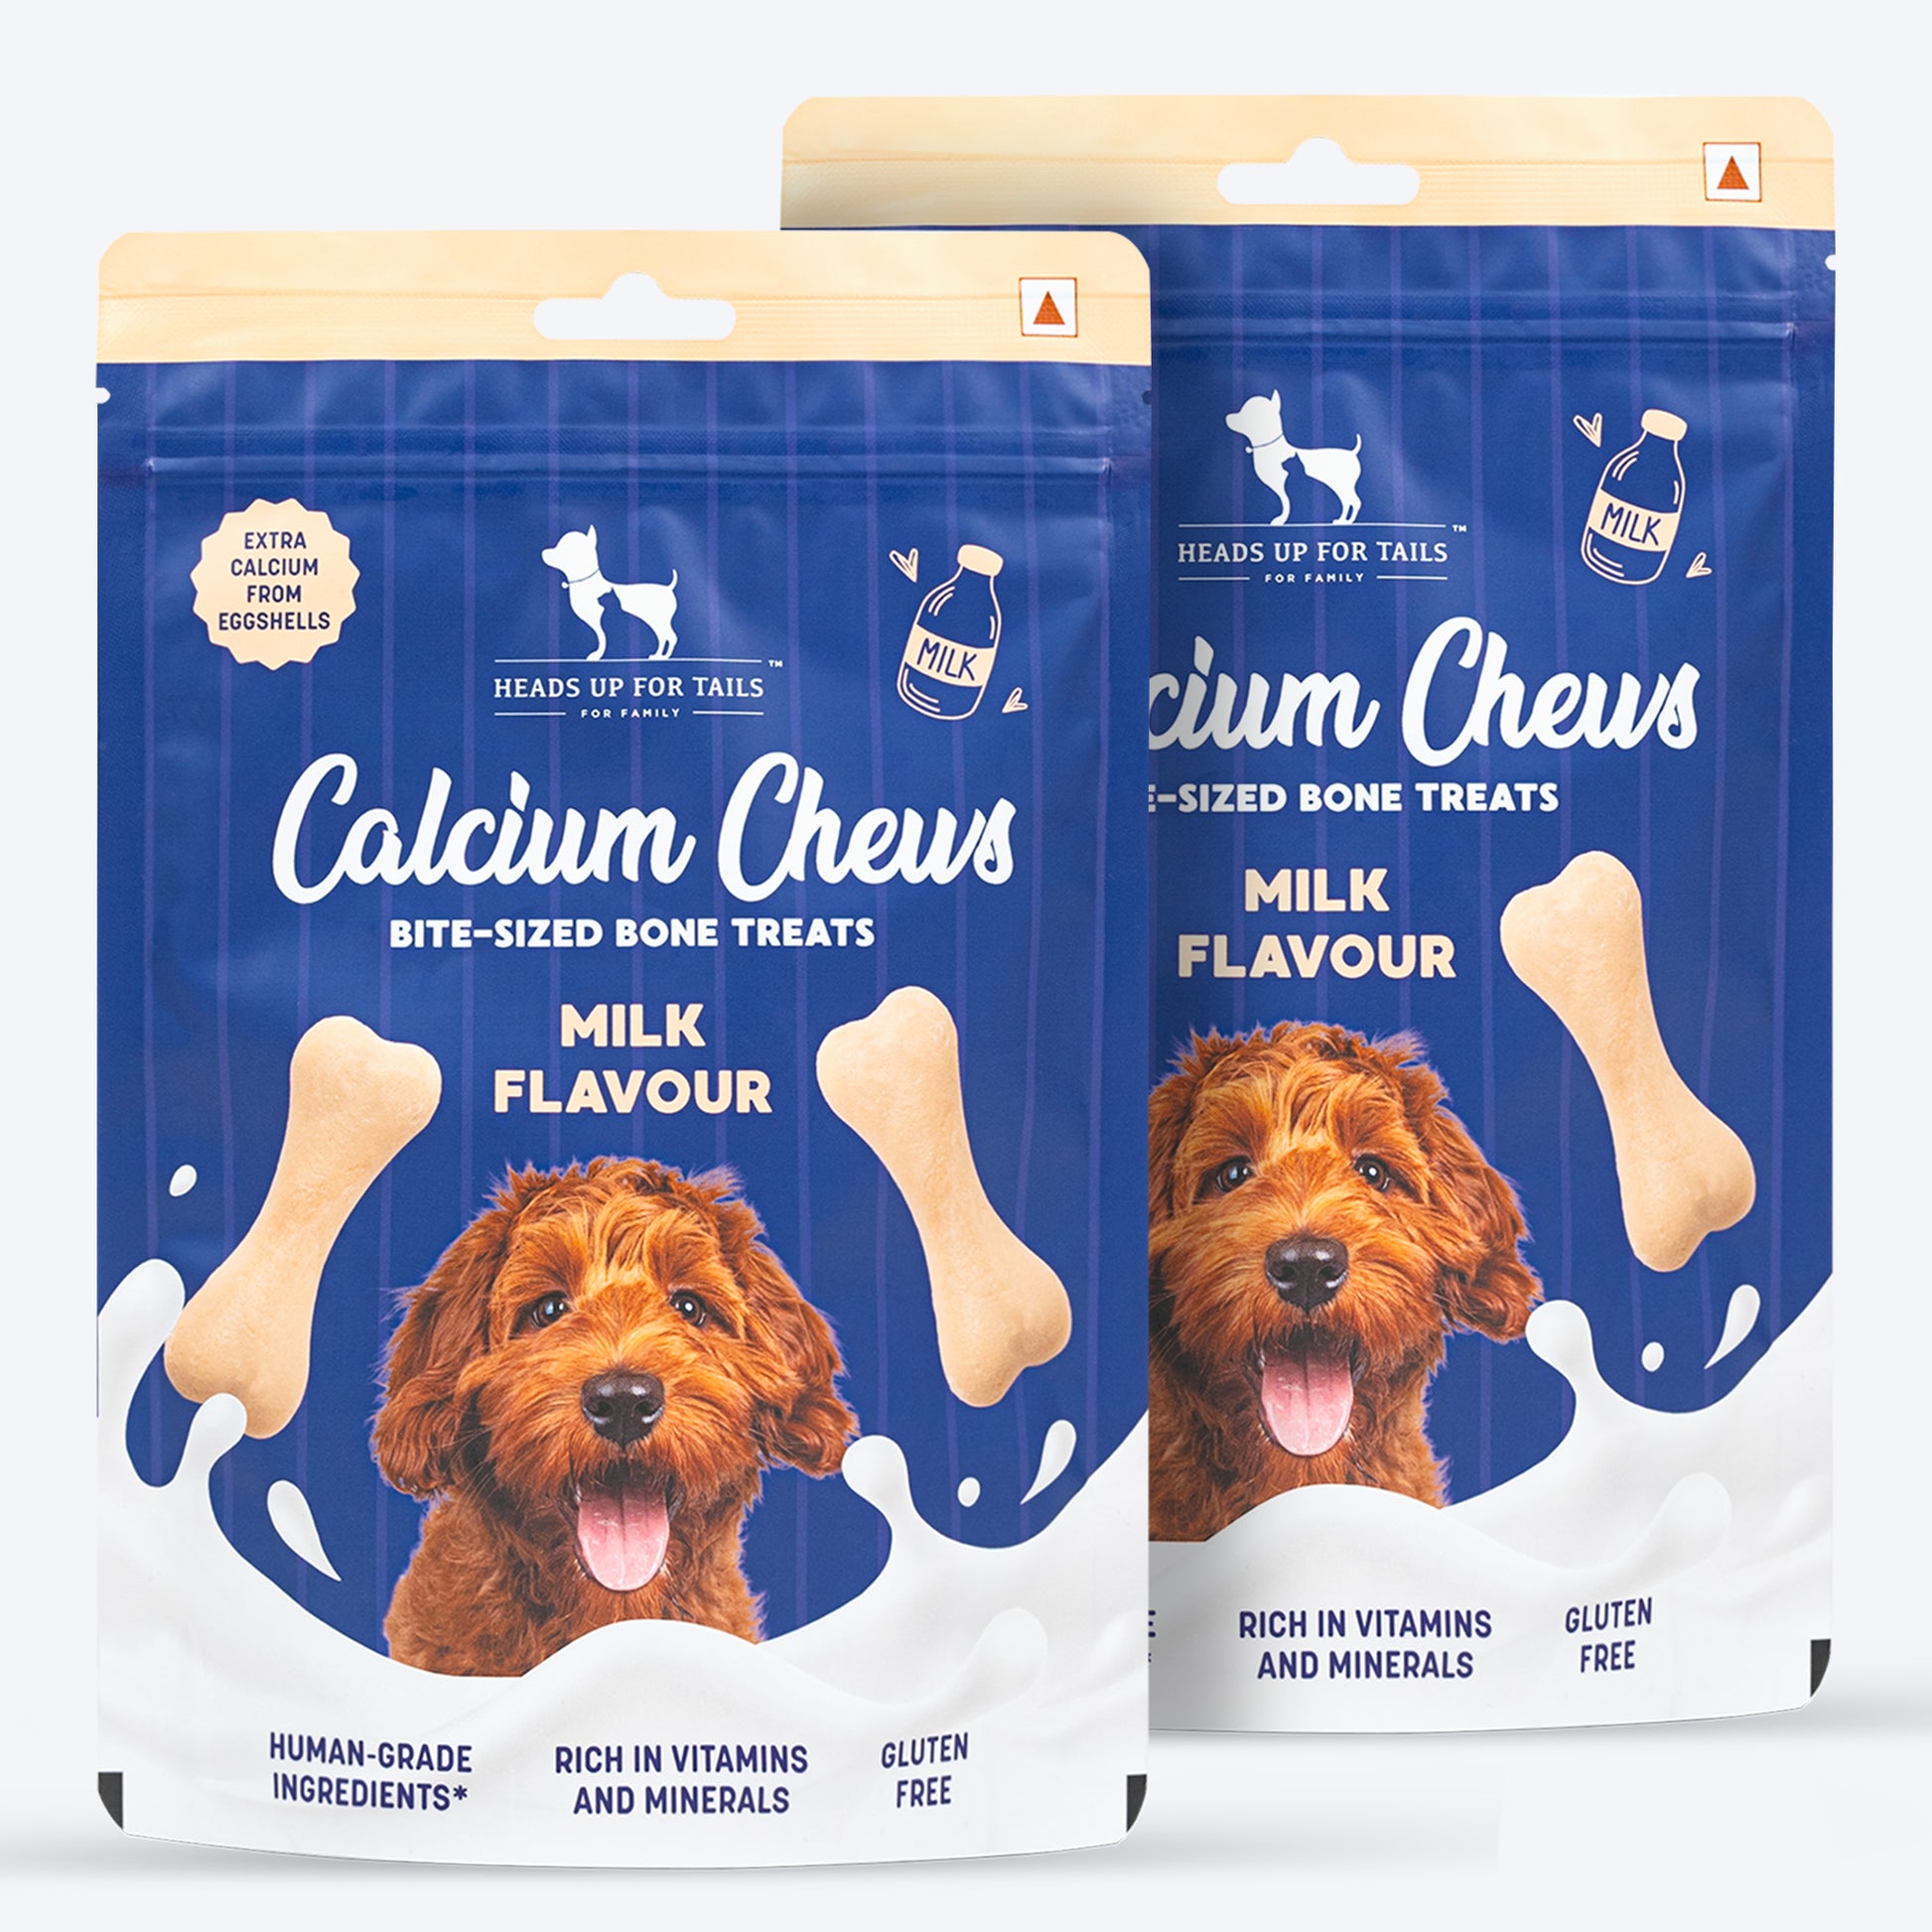 HUFT Calcium Chews Bite-Sized Bone Treats For Dog - Milk Flavour_07